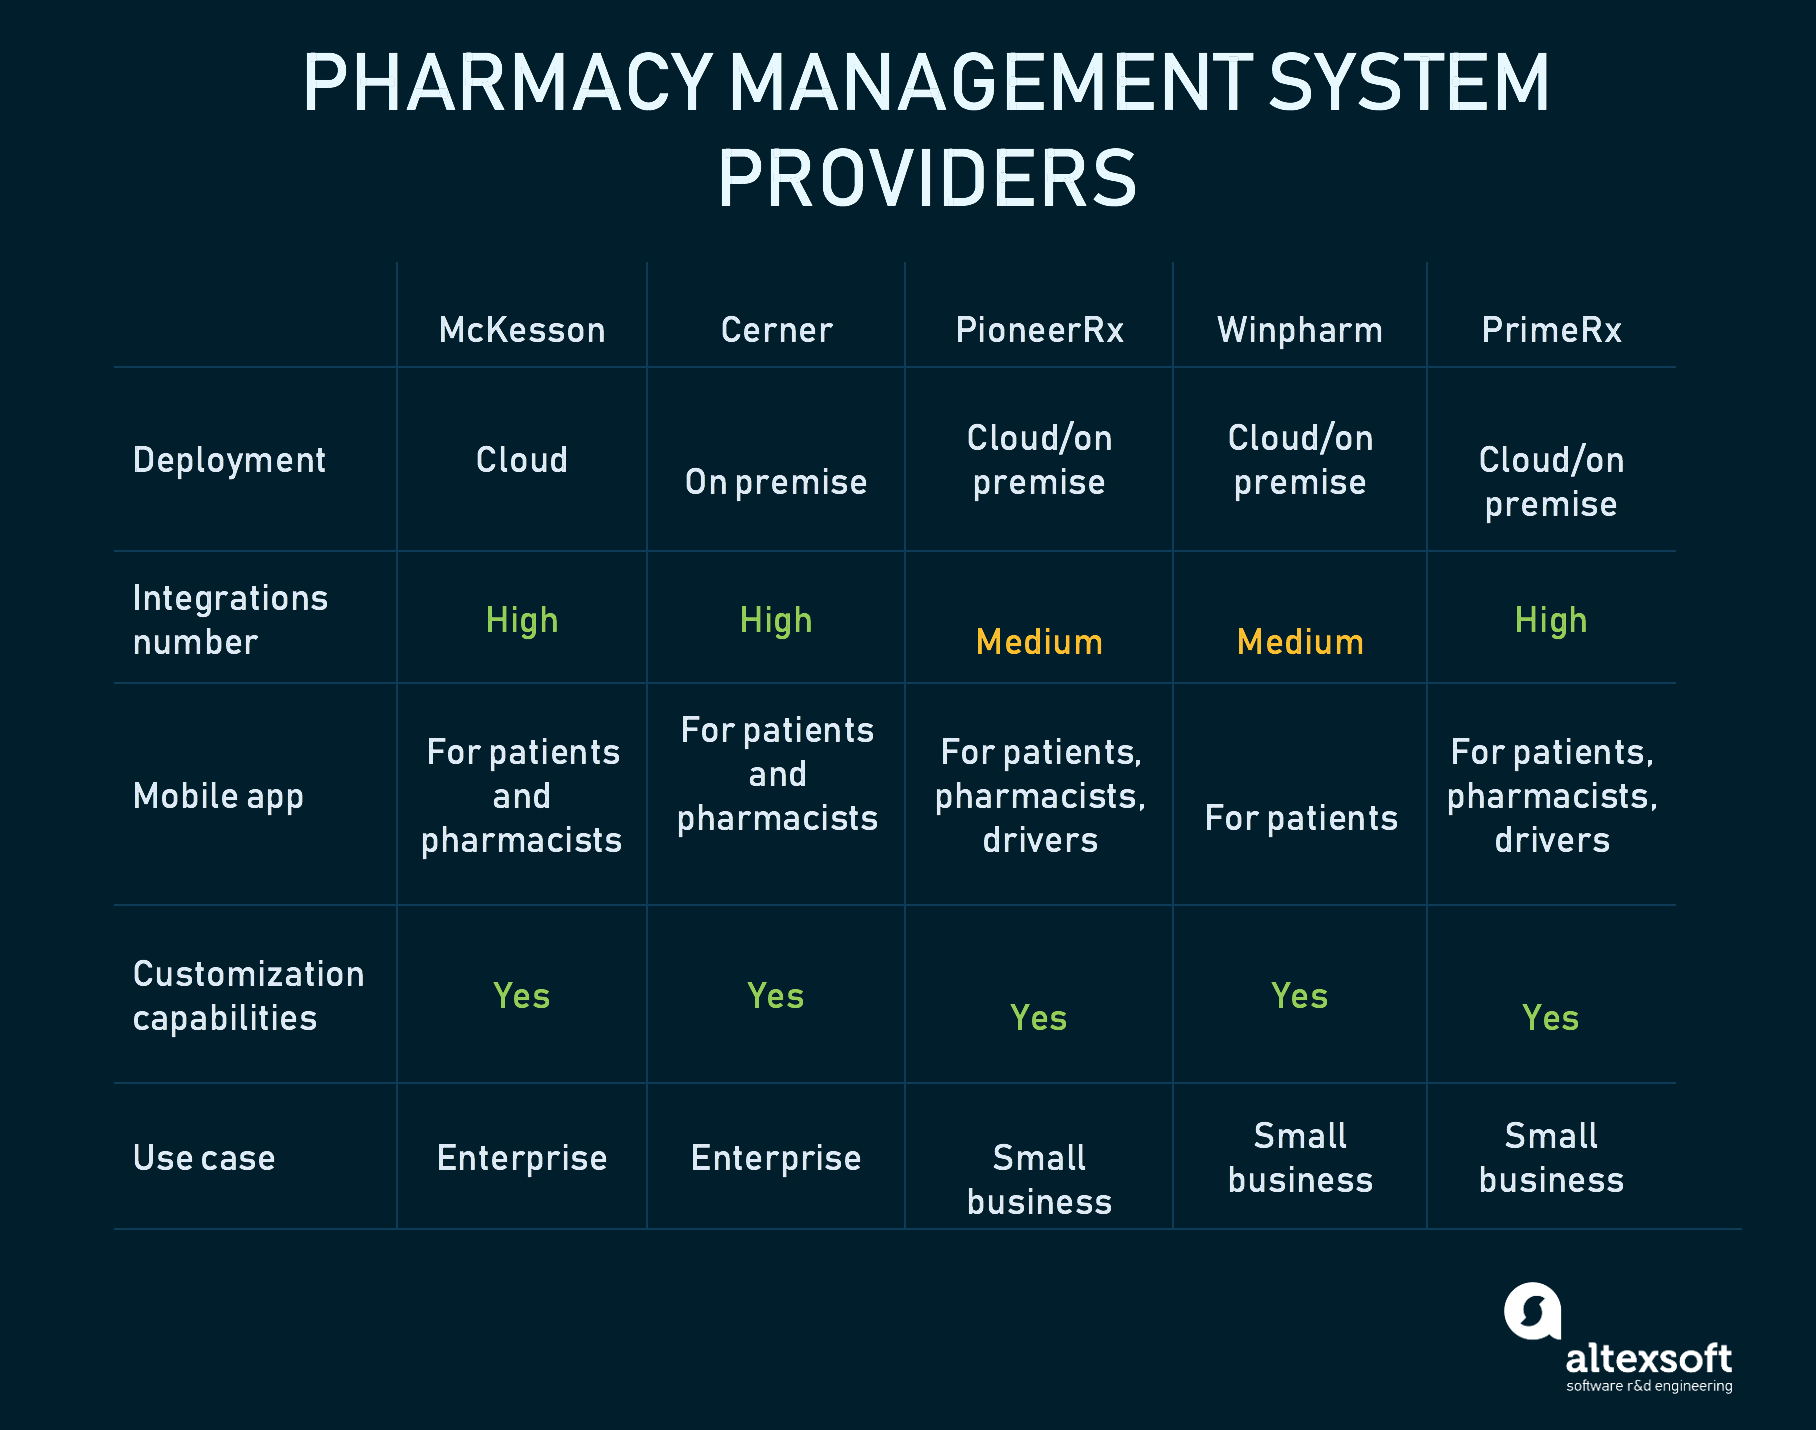 Pharmacy management systems comparison